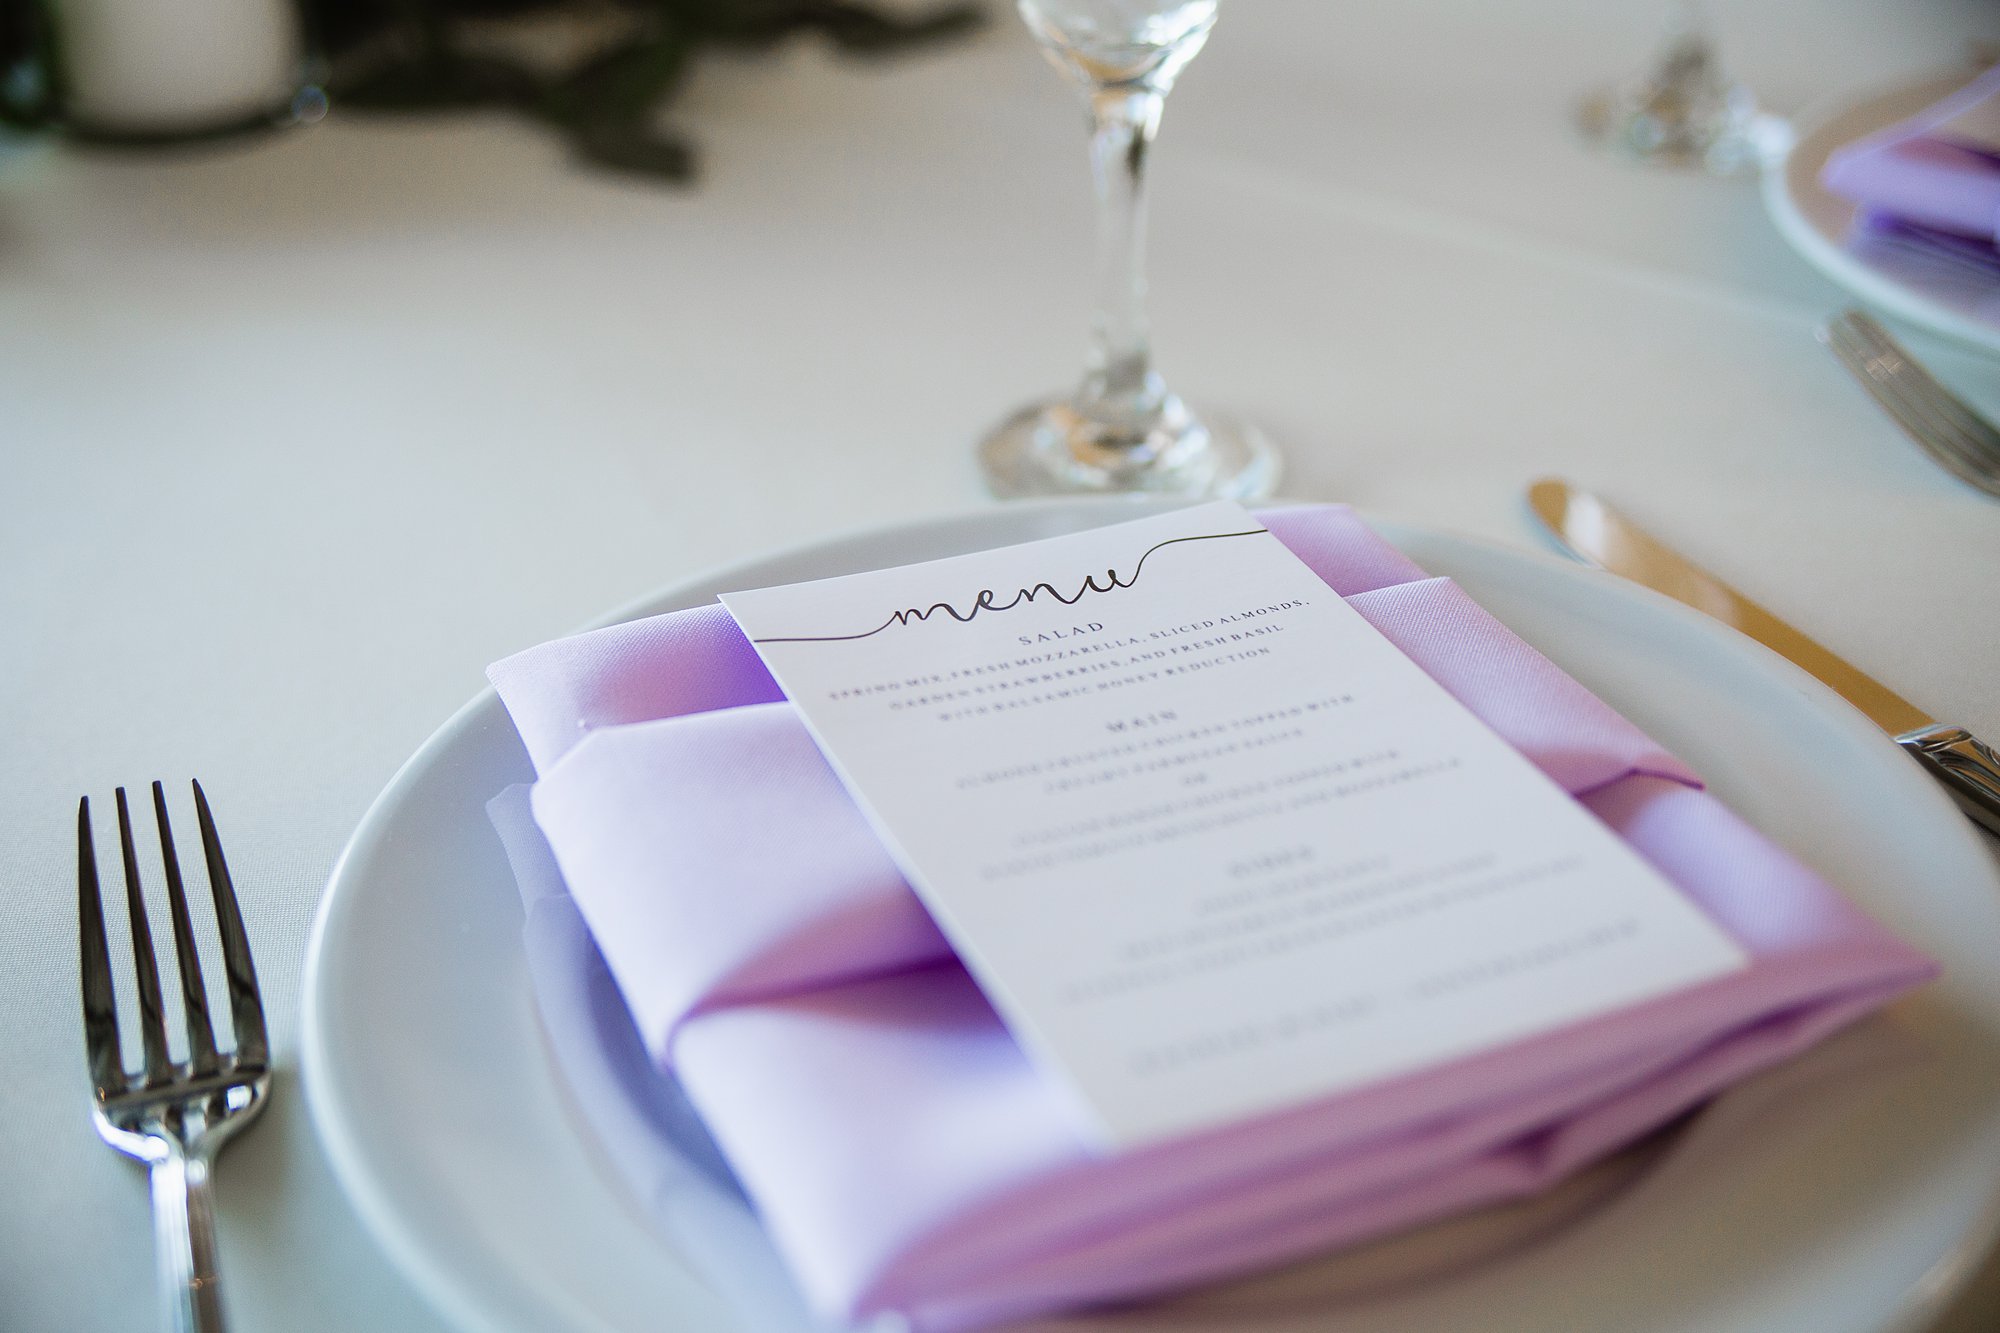 Wedding menu stationary piece on top of lavender napkin by wedding photographer PMA Photography.